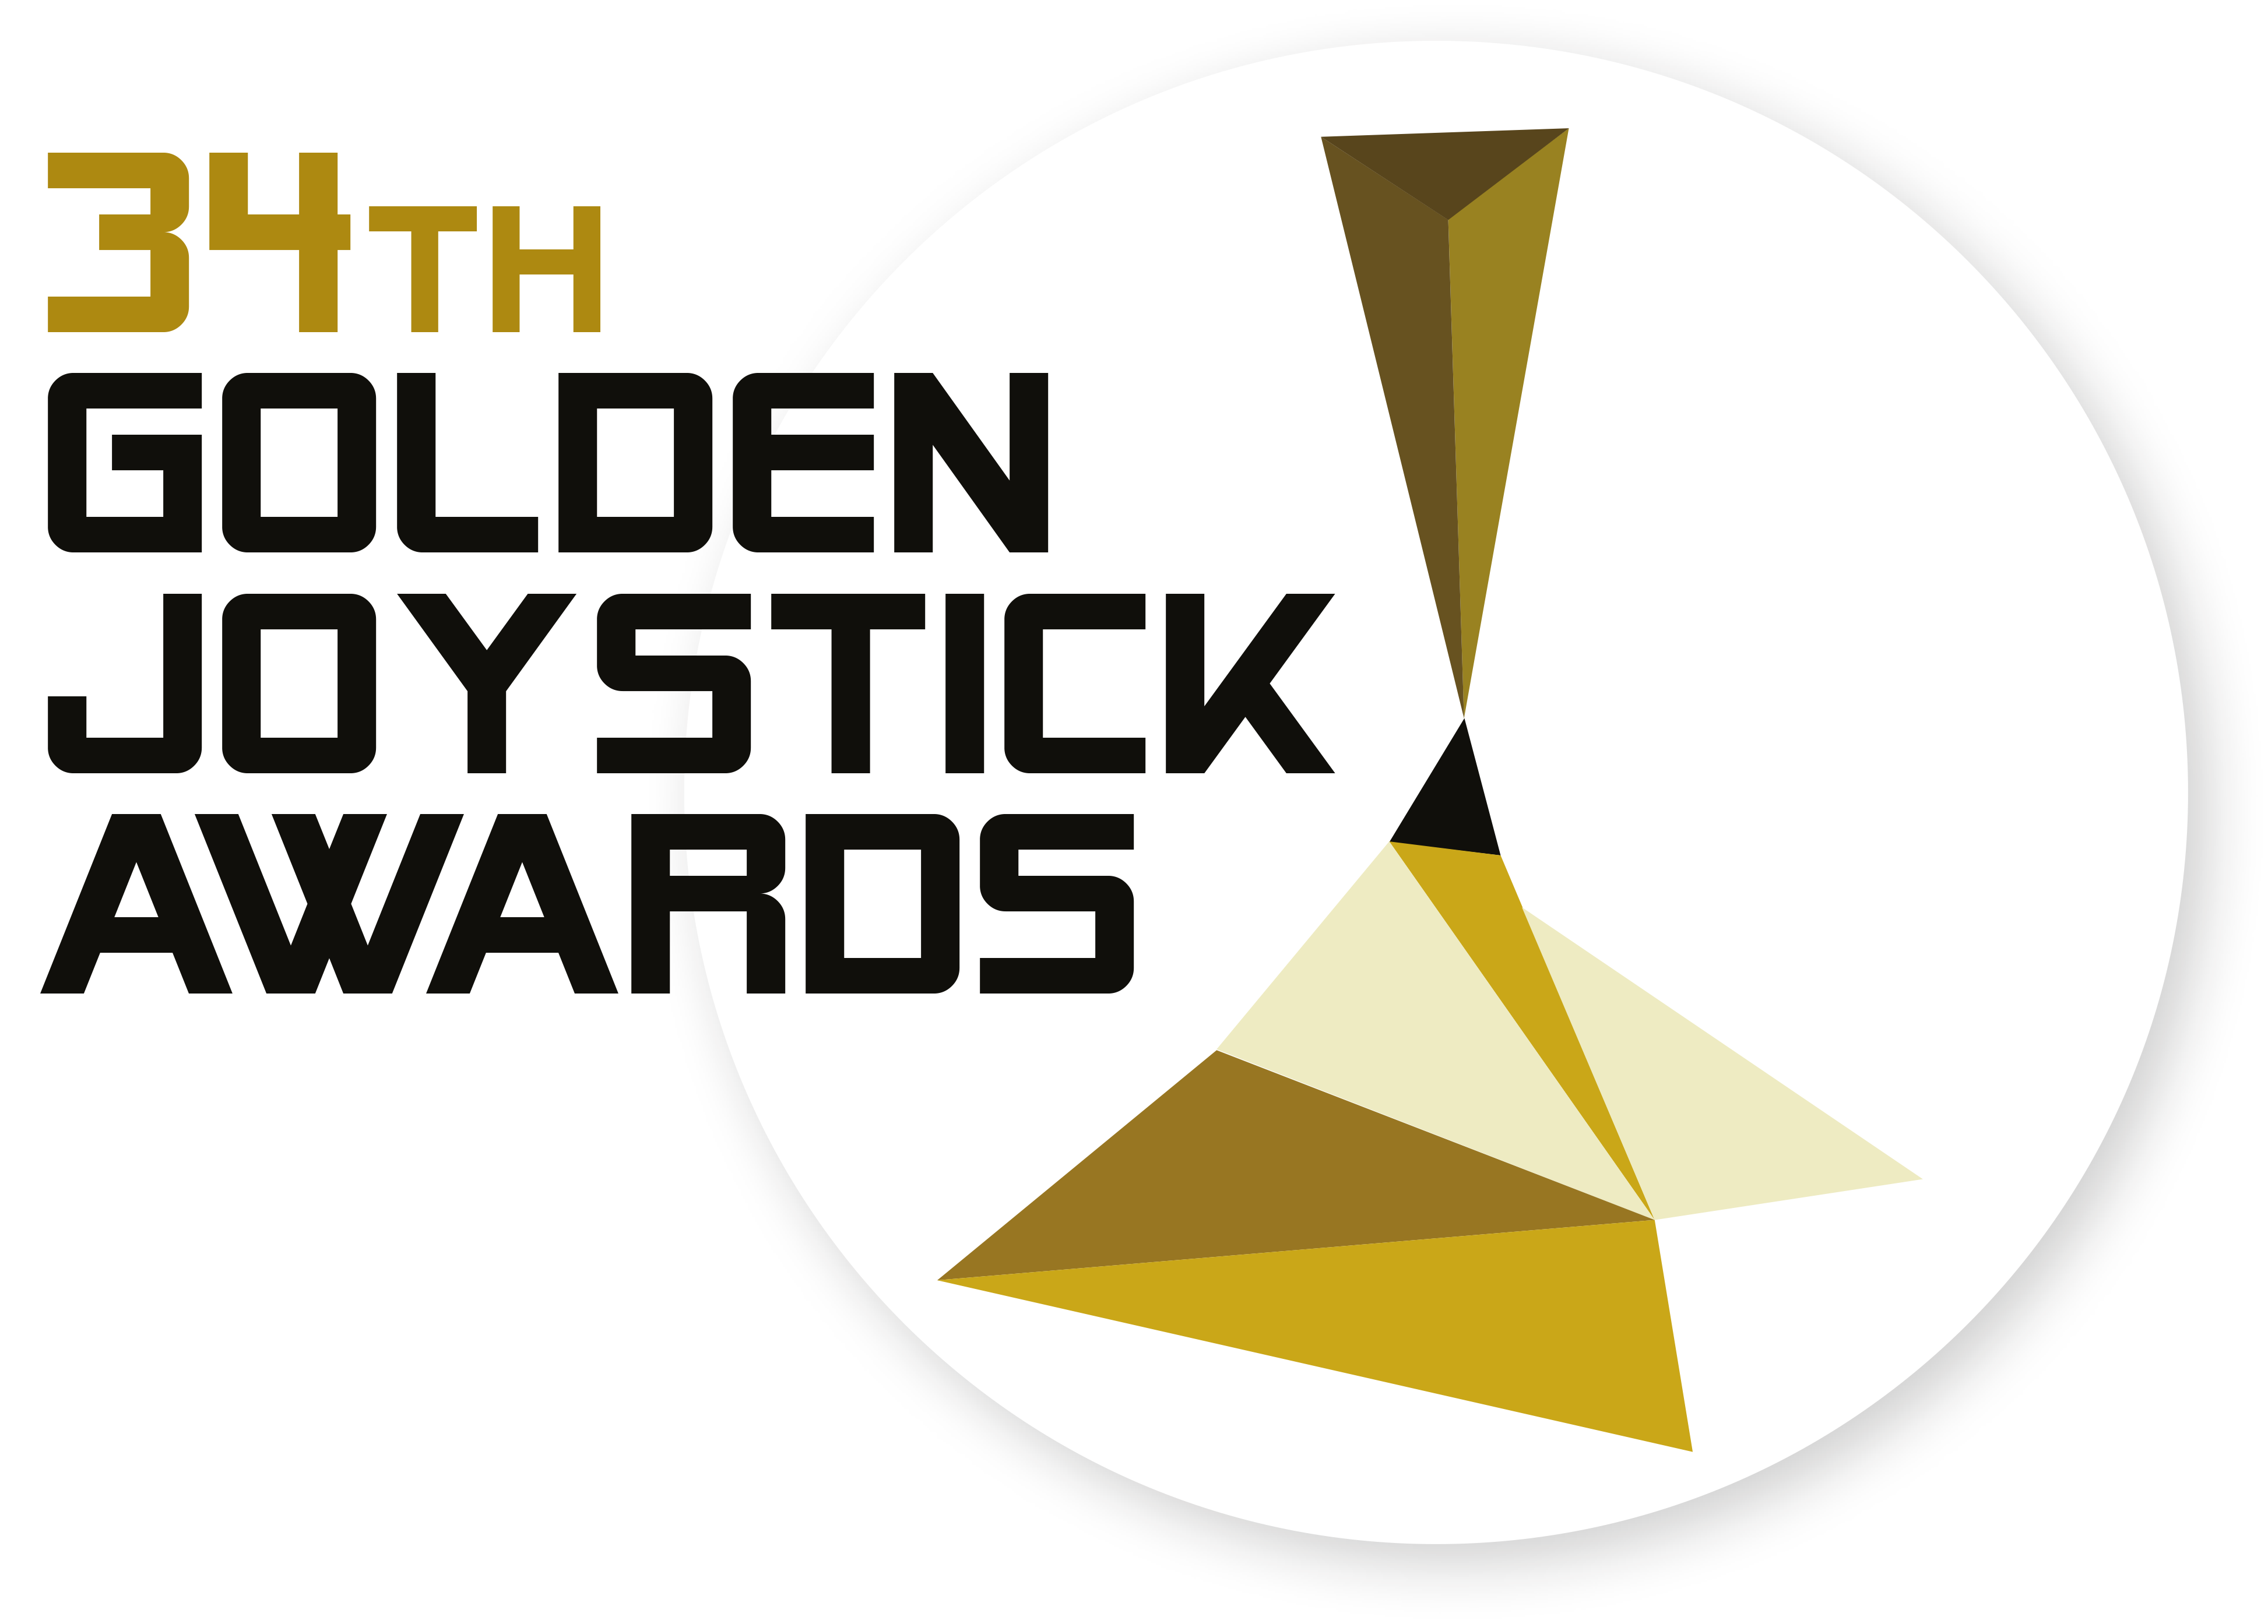 Winners of the Golden Joystick Awards announced